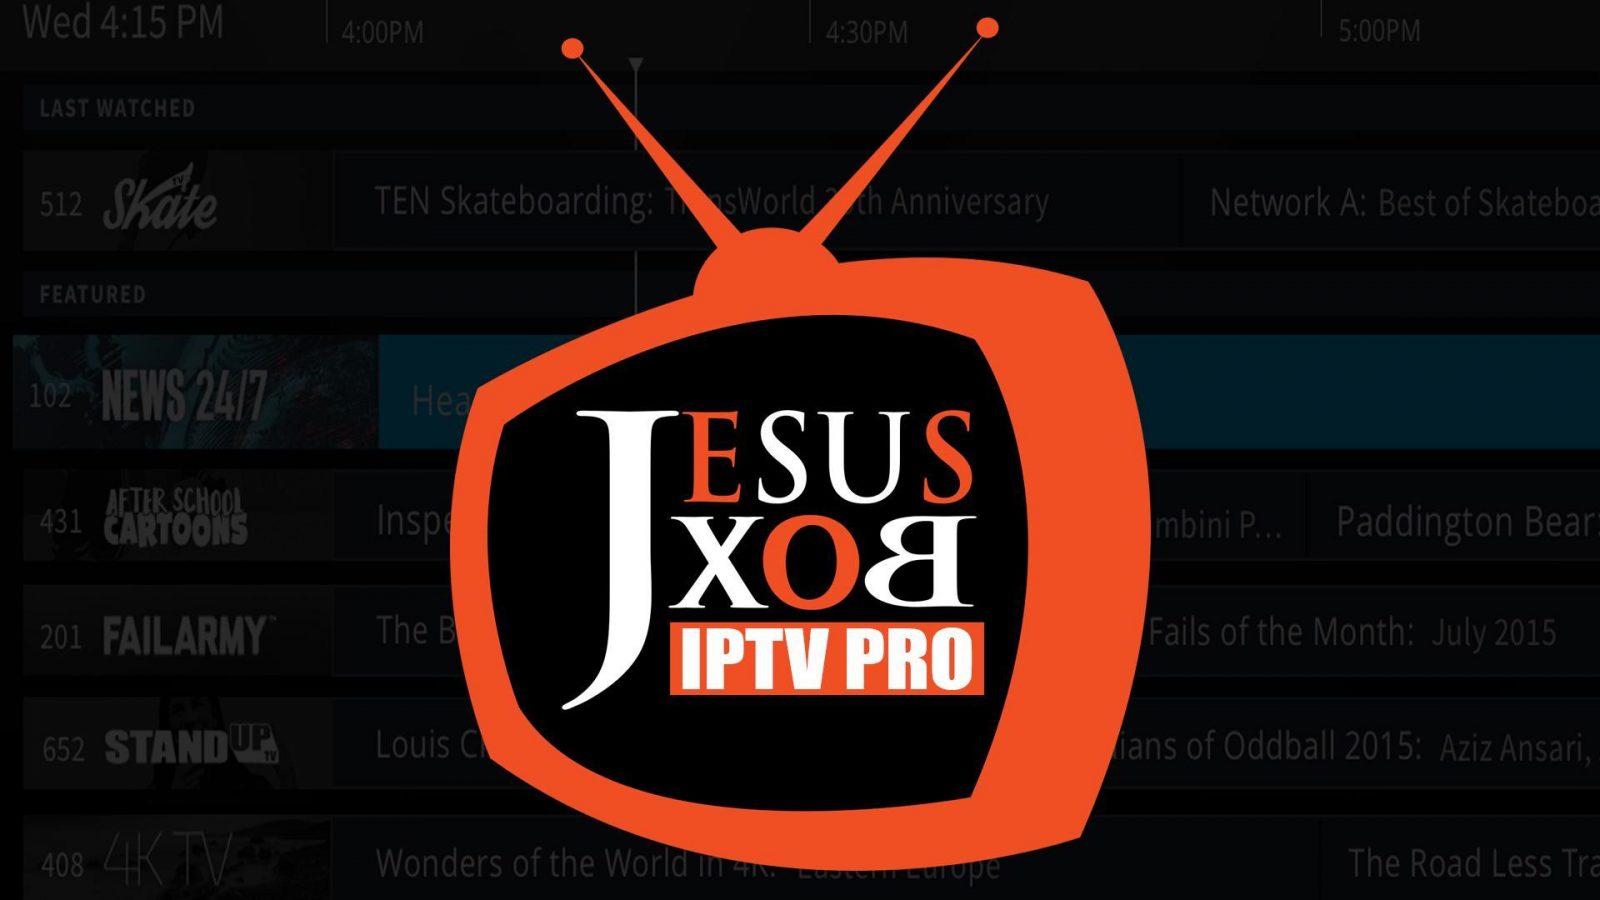 Jesus Box IPTV: Features, Price and Setup